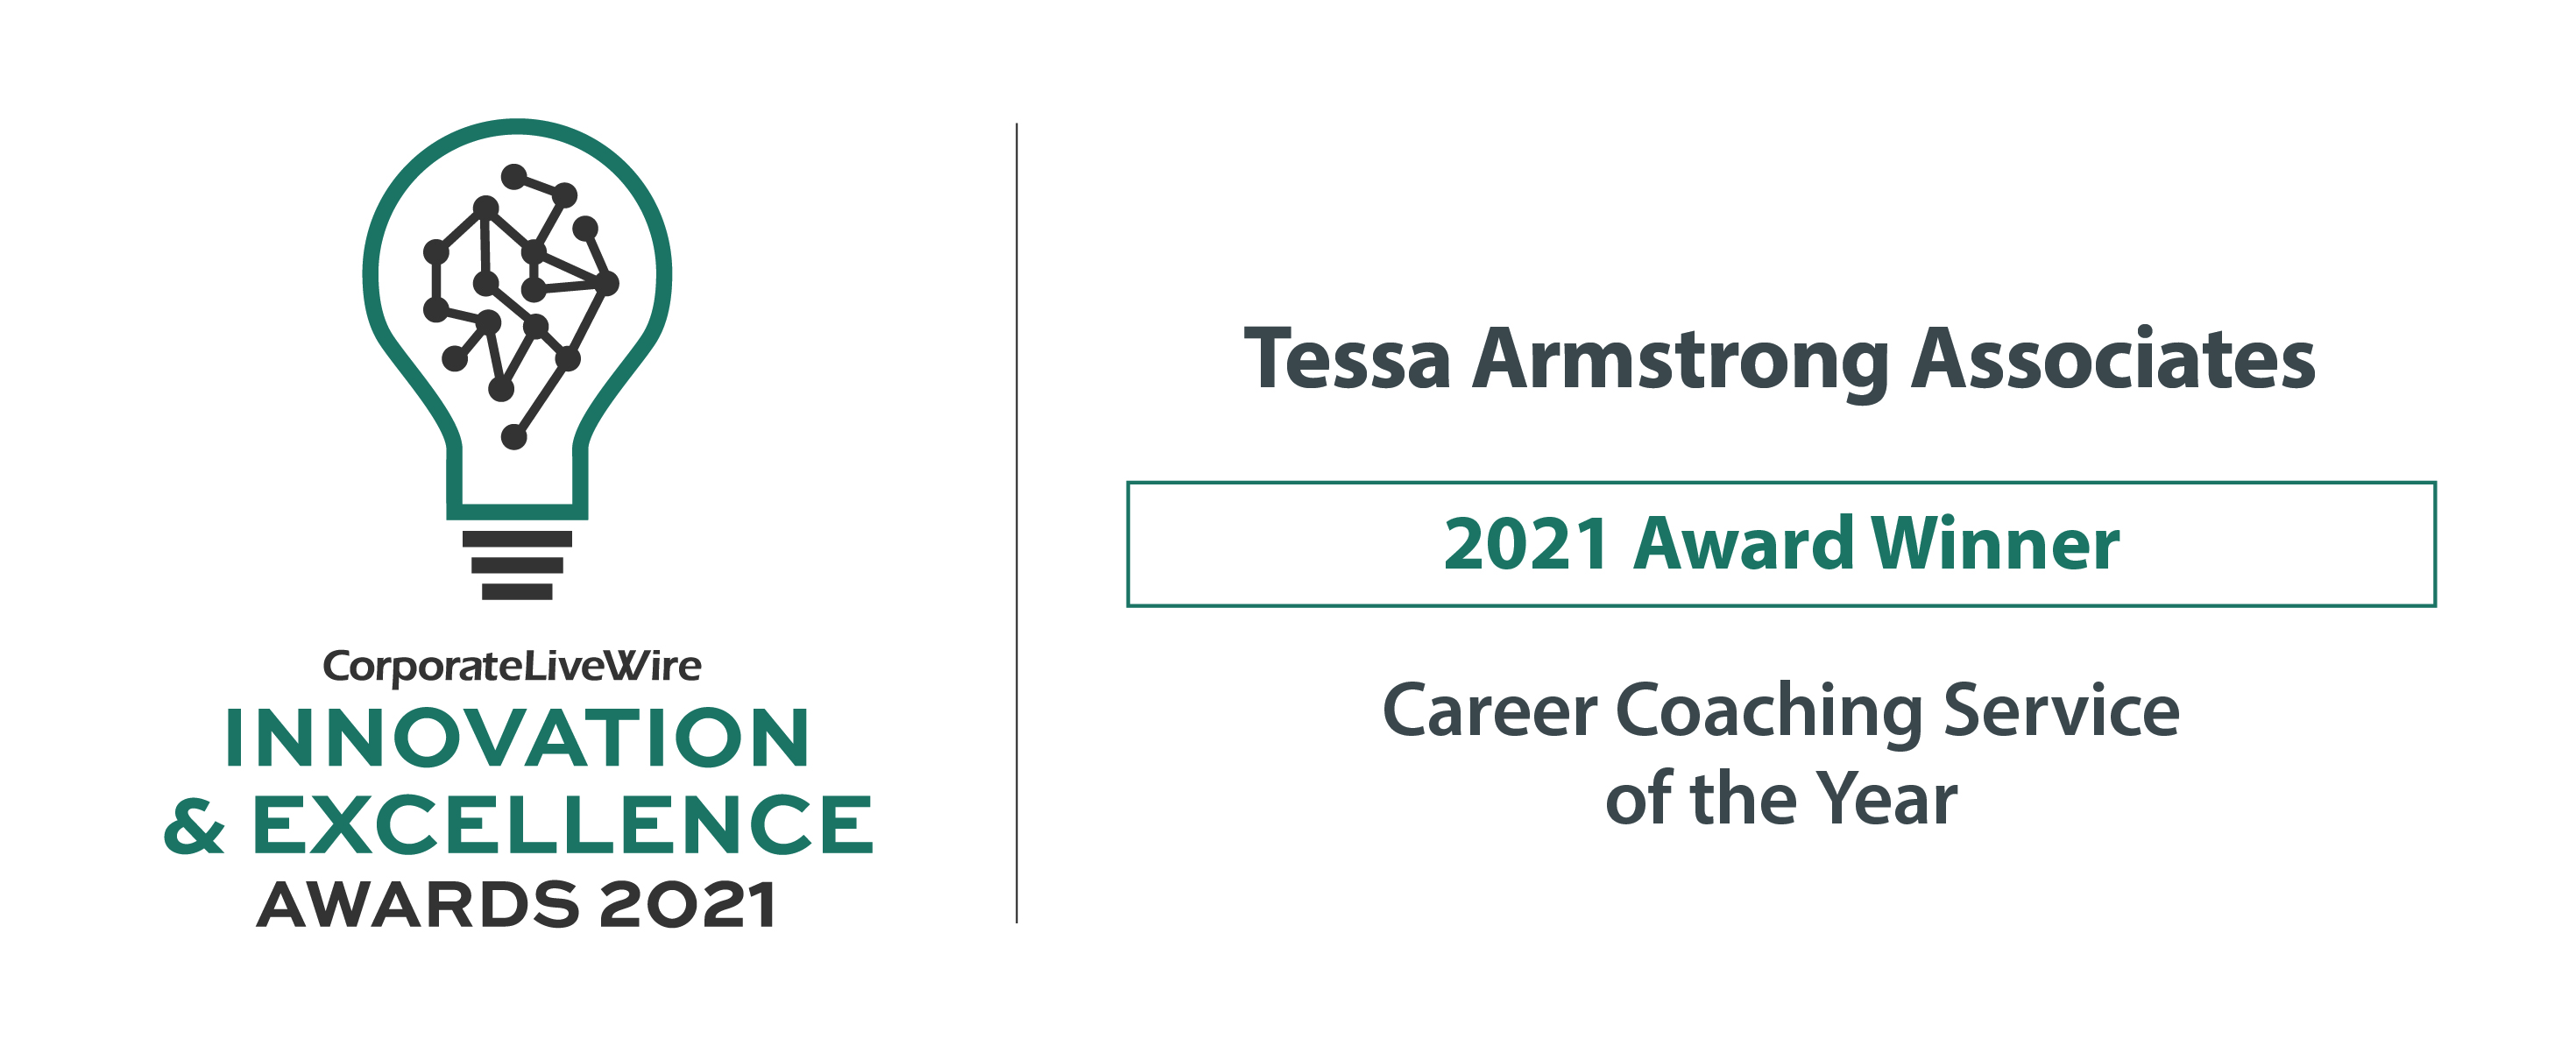 Tessa Armstrong Associates Corporate Live Wire Award